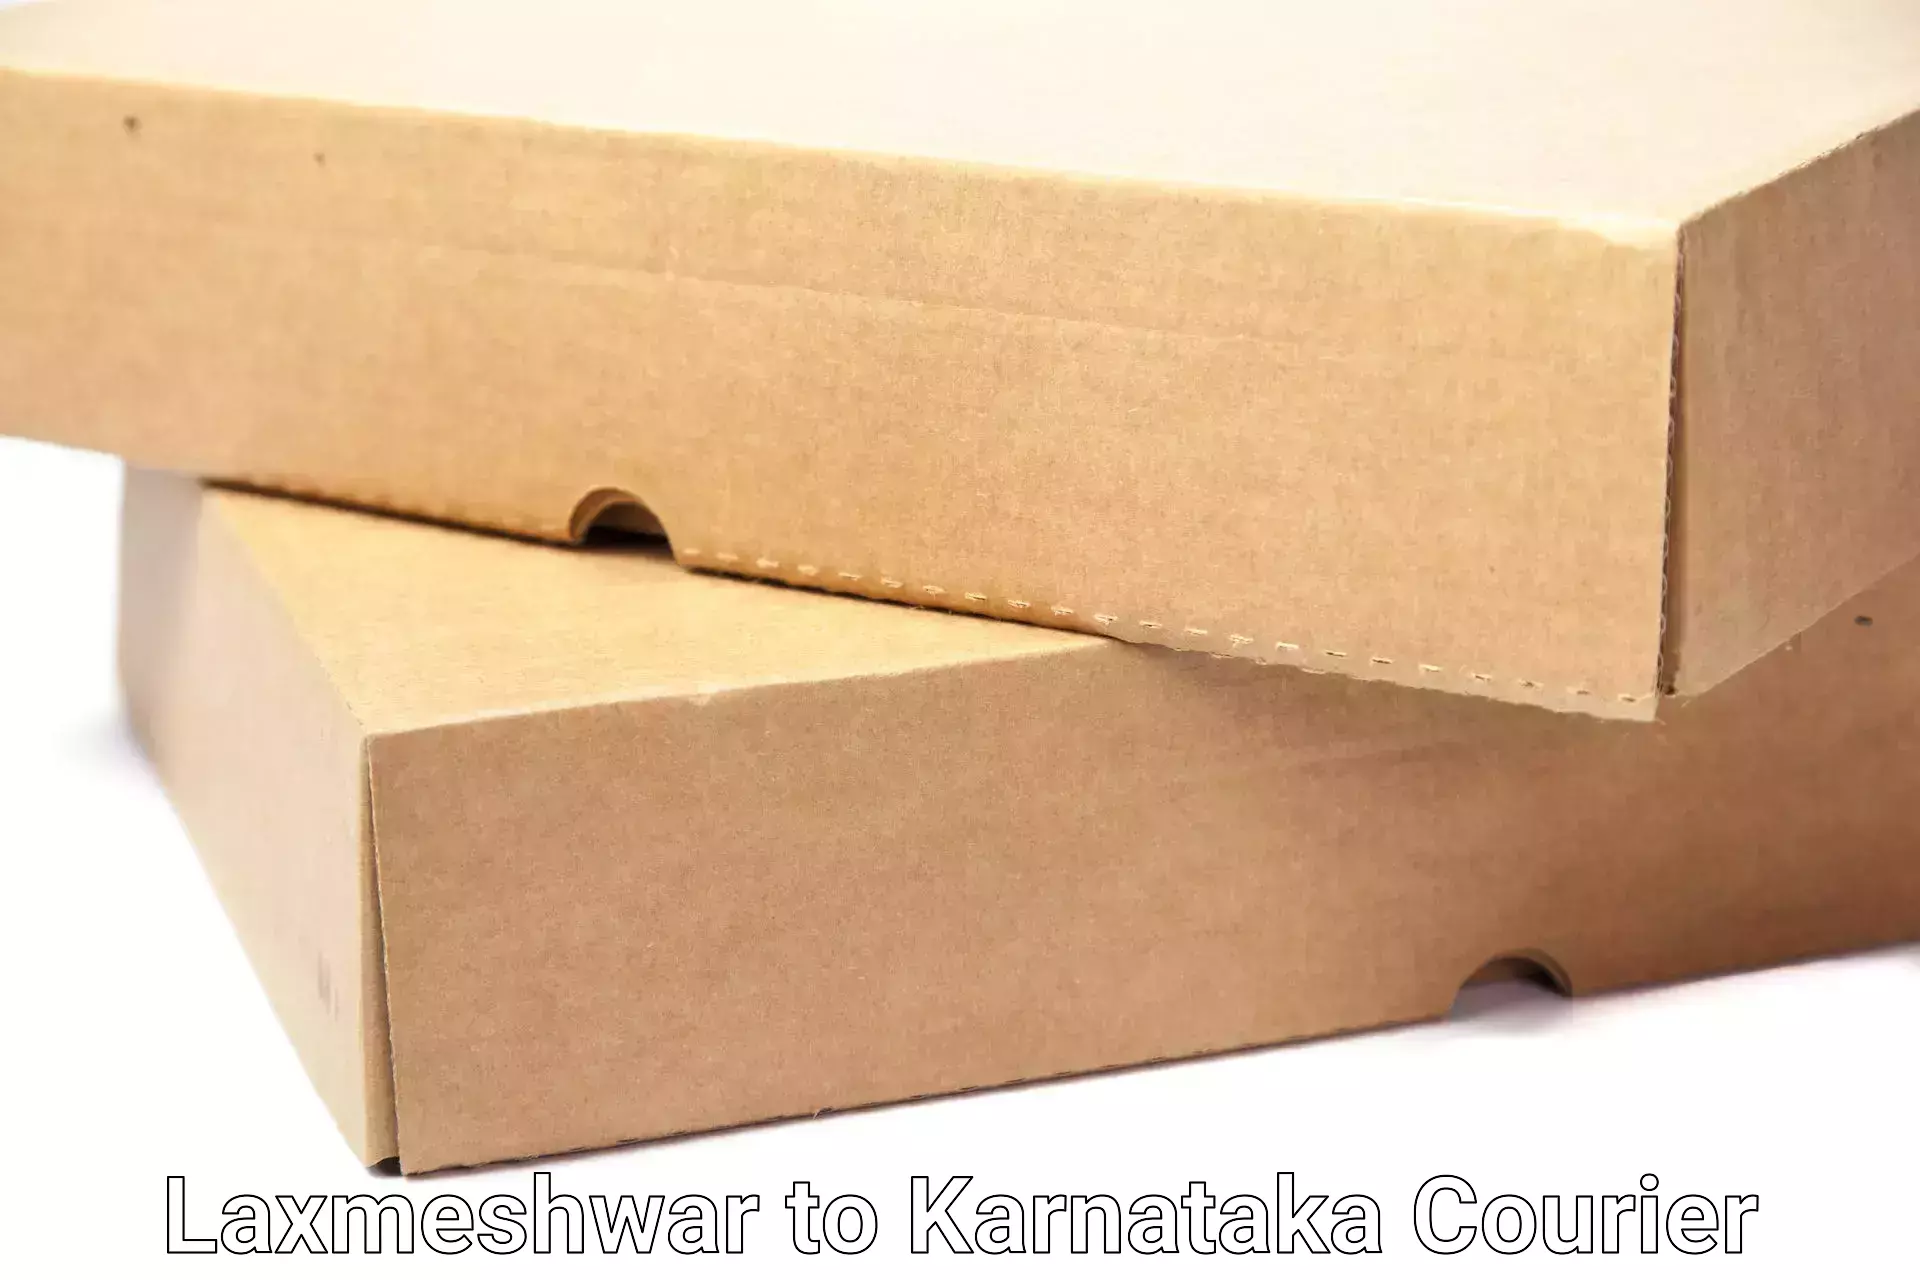 Home relocation experts Laxmeshwar to Karnataka